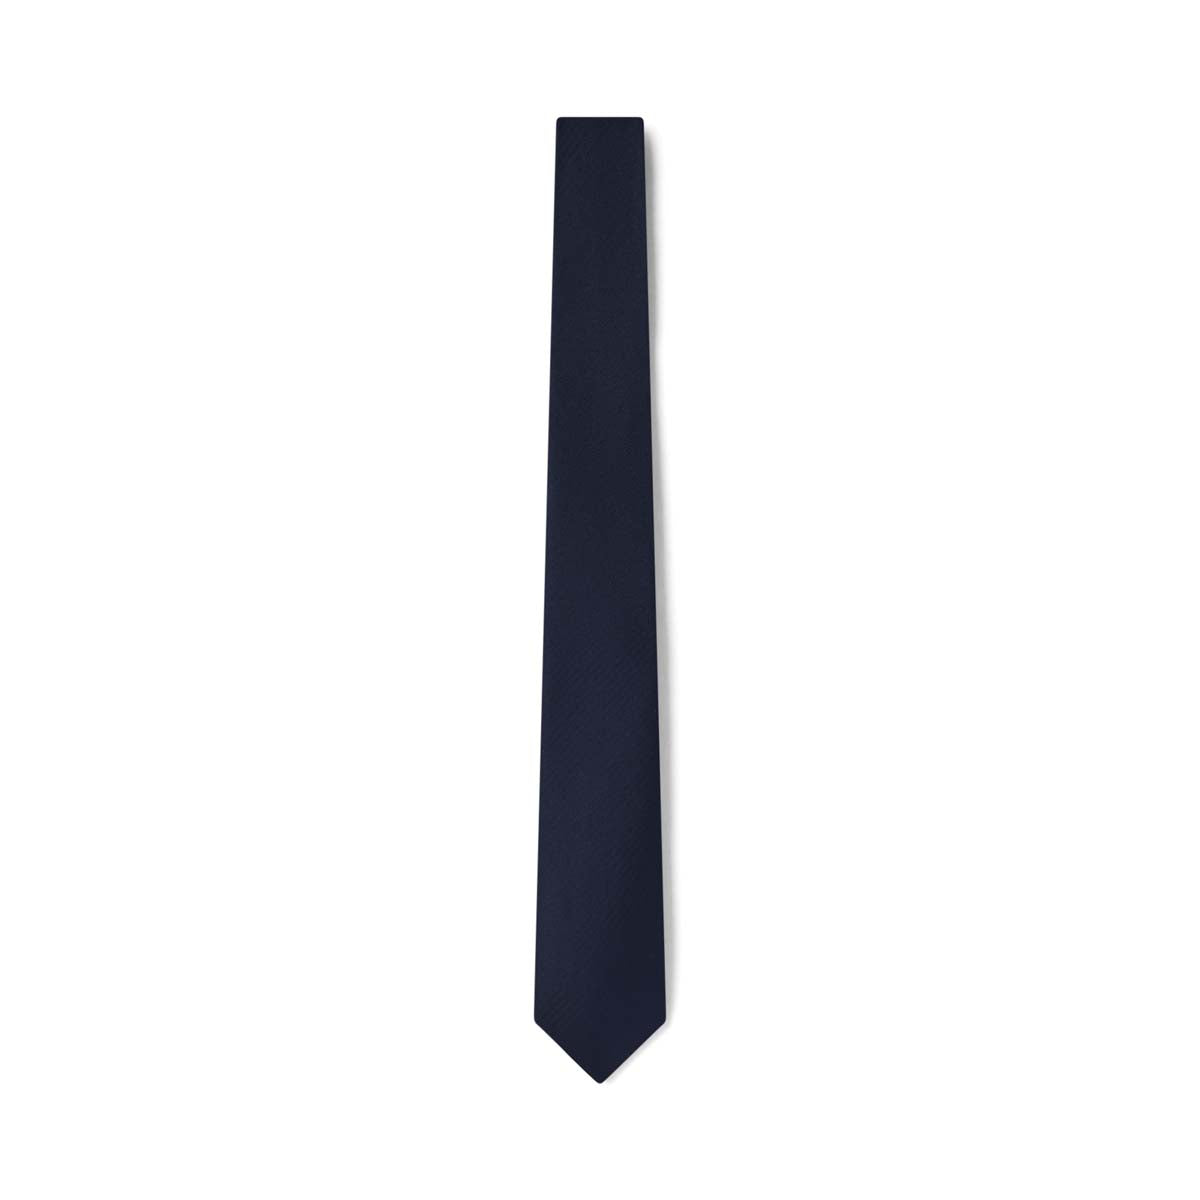 Cravate twill bleu marine